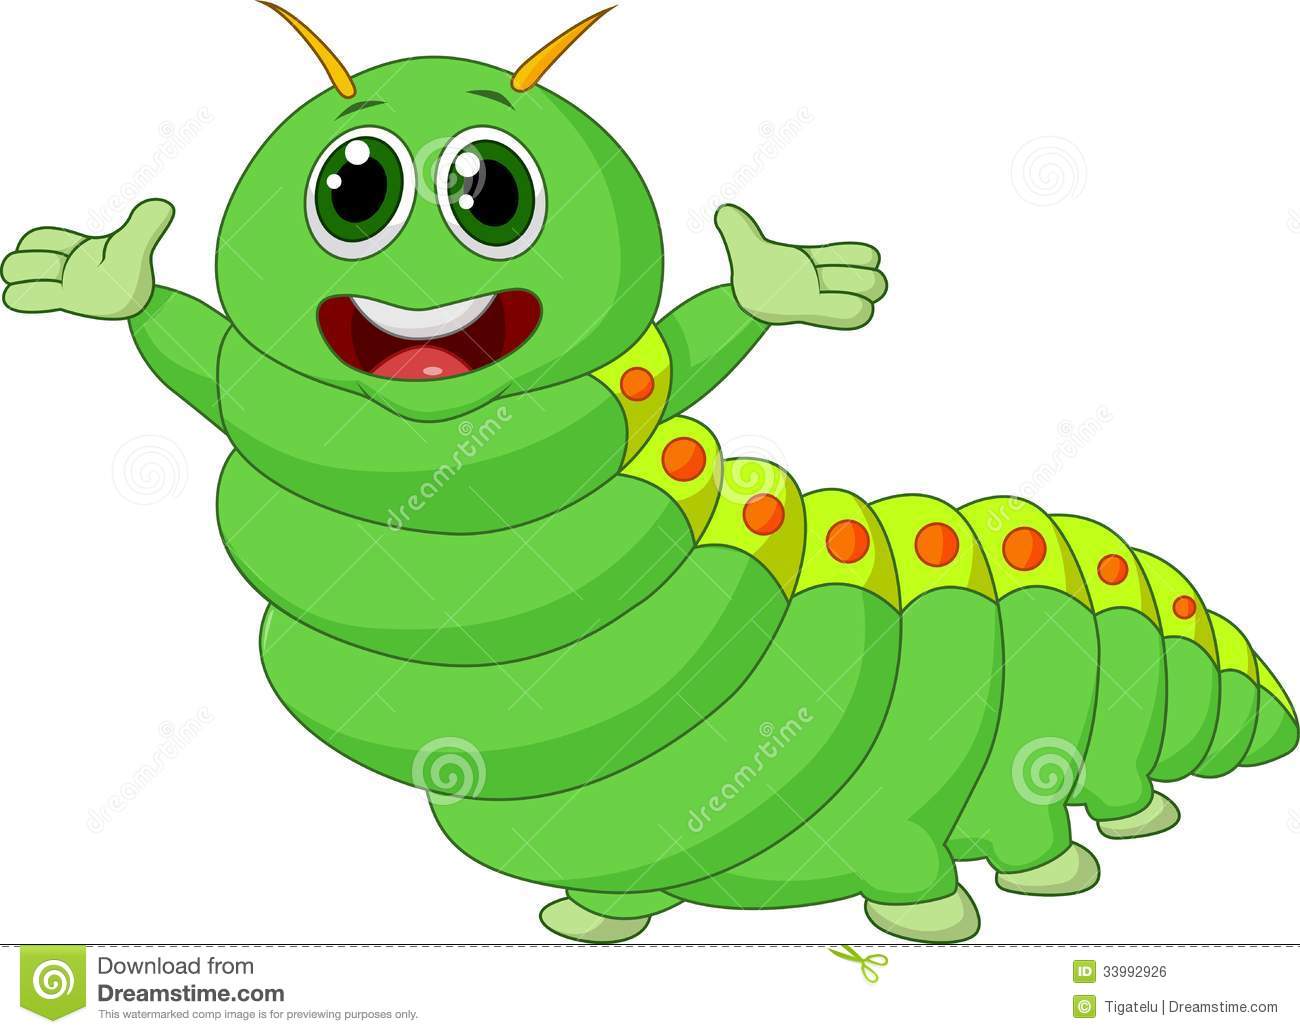 Cute Caterpillar Cartoon Royalty Free Stock Image   Image  33992926